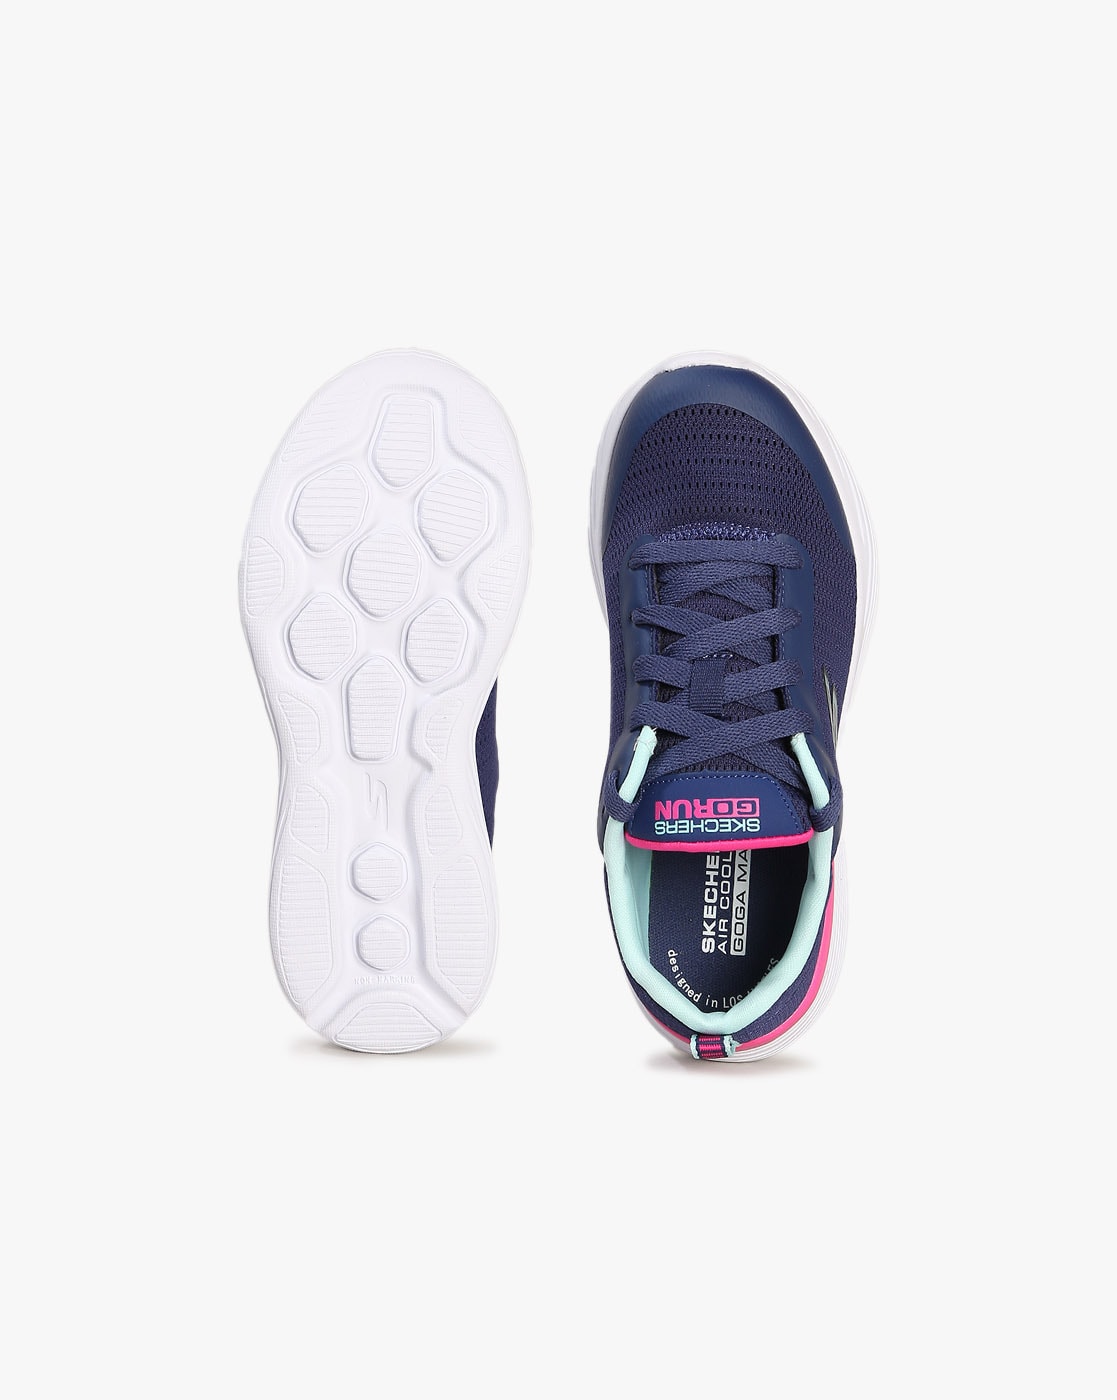 Skechers Go Run Consistent Blue Purple Womens Running Sneakers | eBay